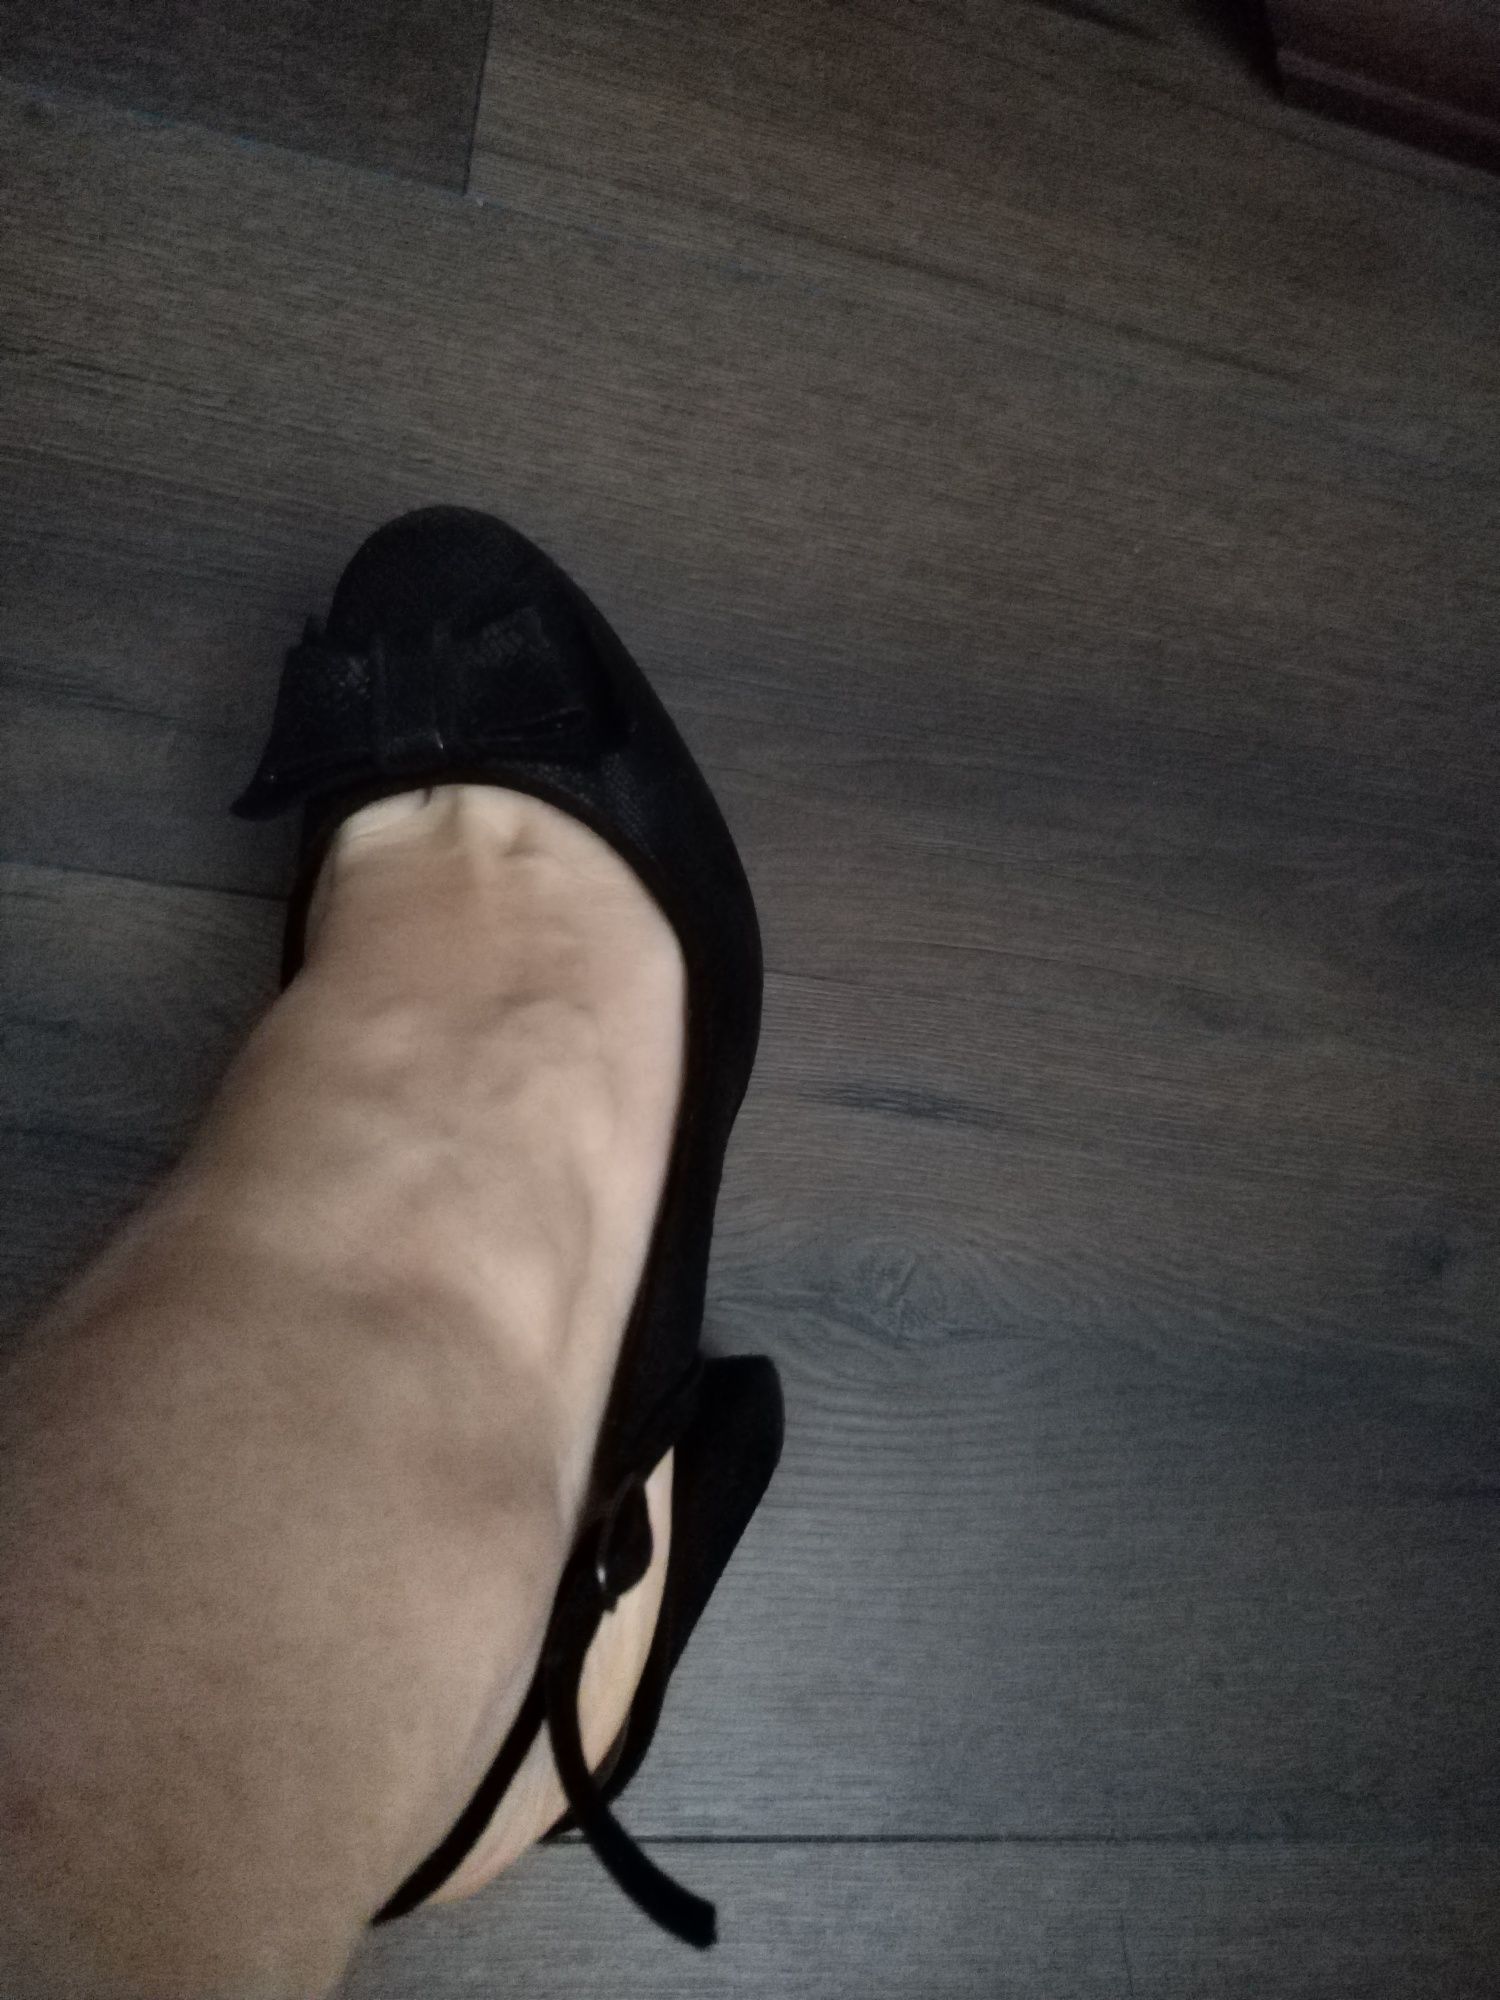 Pantofi din piele naturala eleganți(negri)